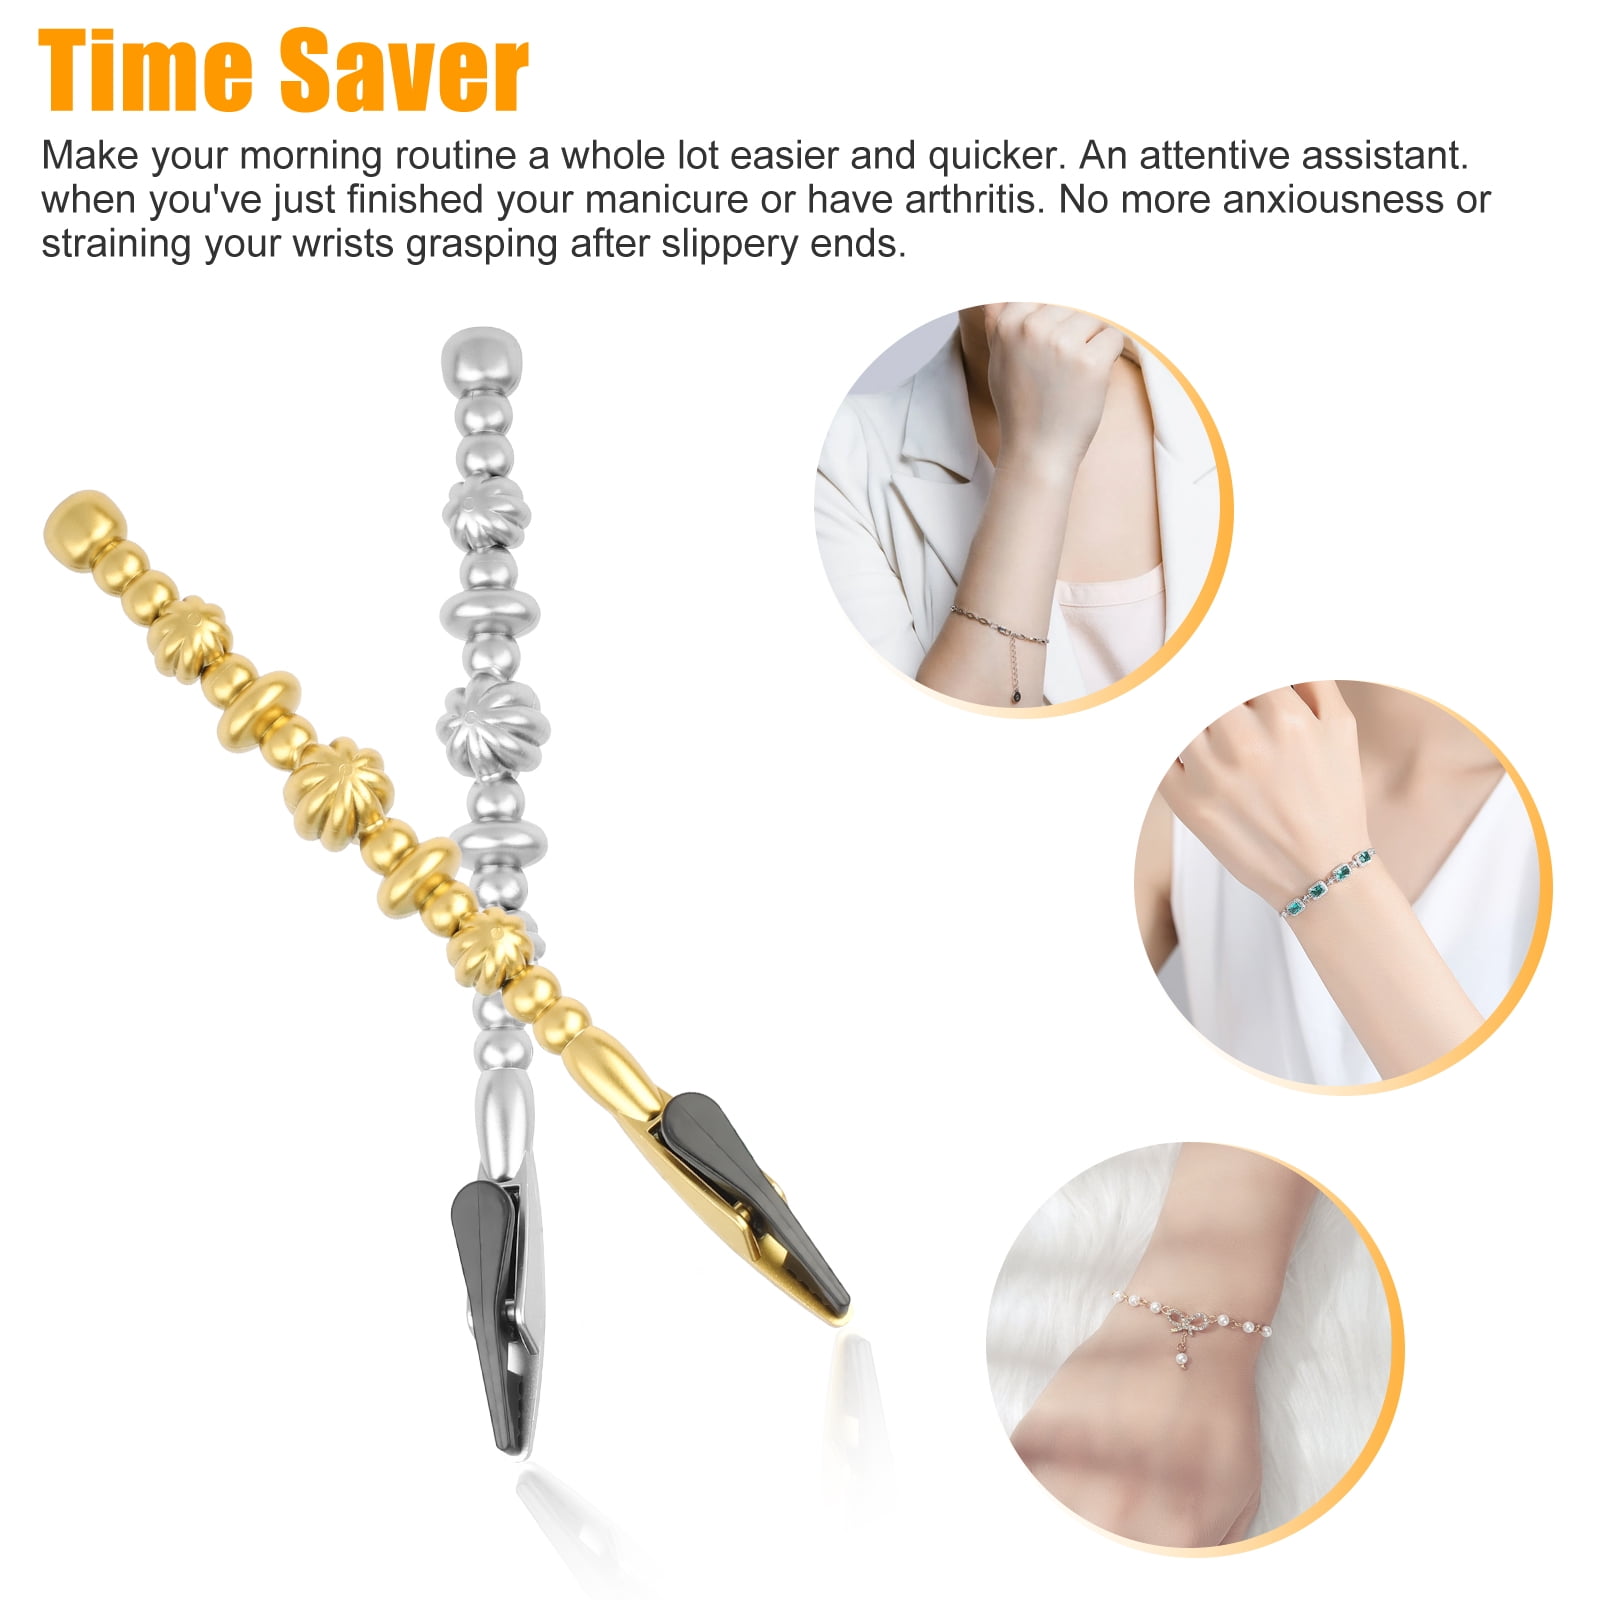 Ausnew Home Care  Bracelet Fastener Helper